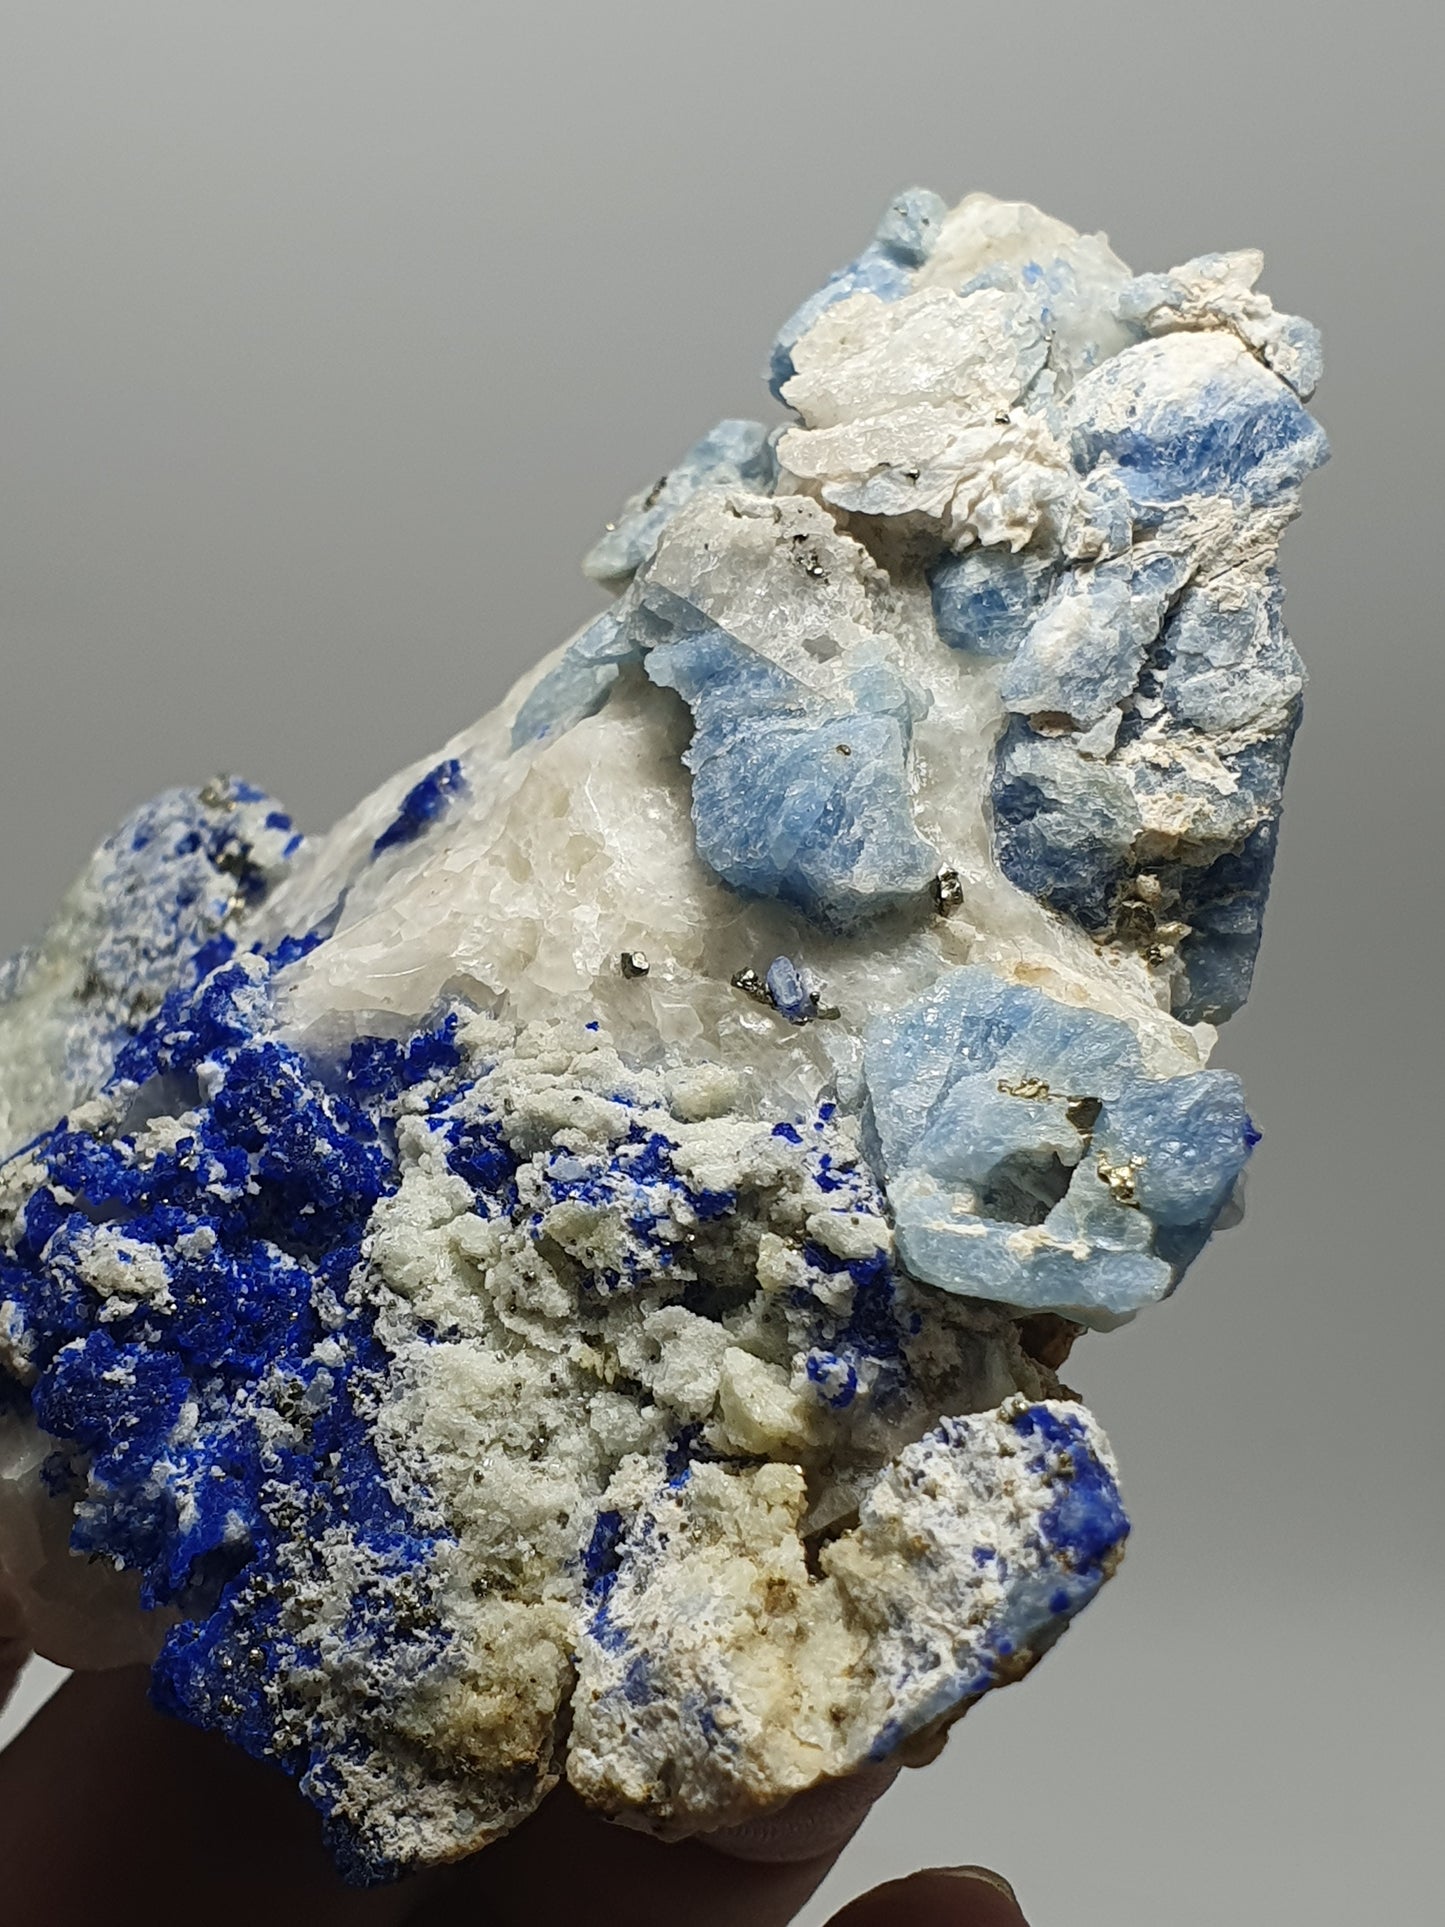 Afghanite & Lapis Lazuli Singapore Mineral